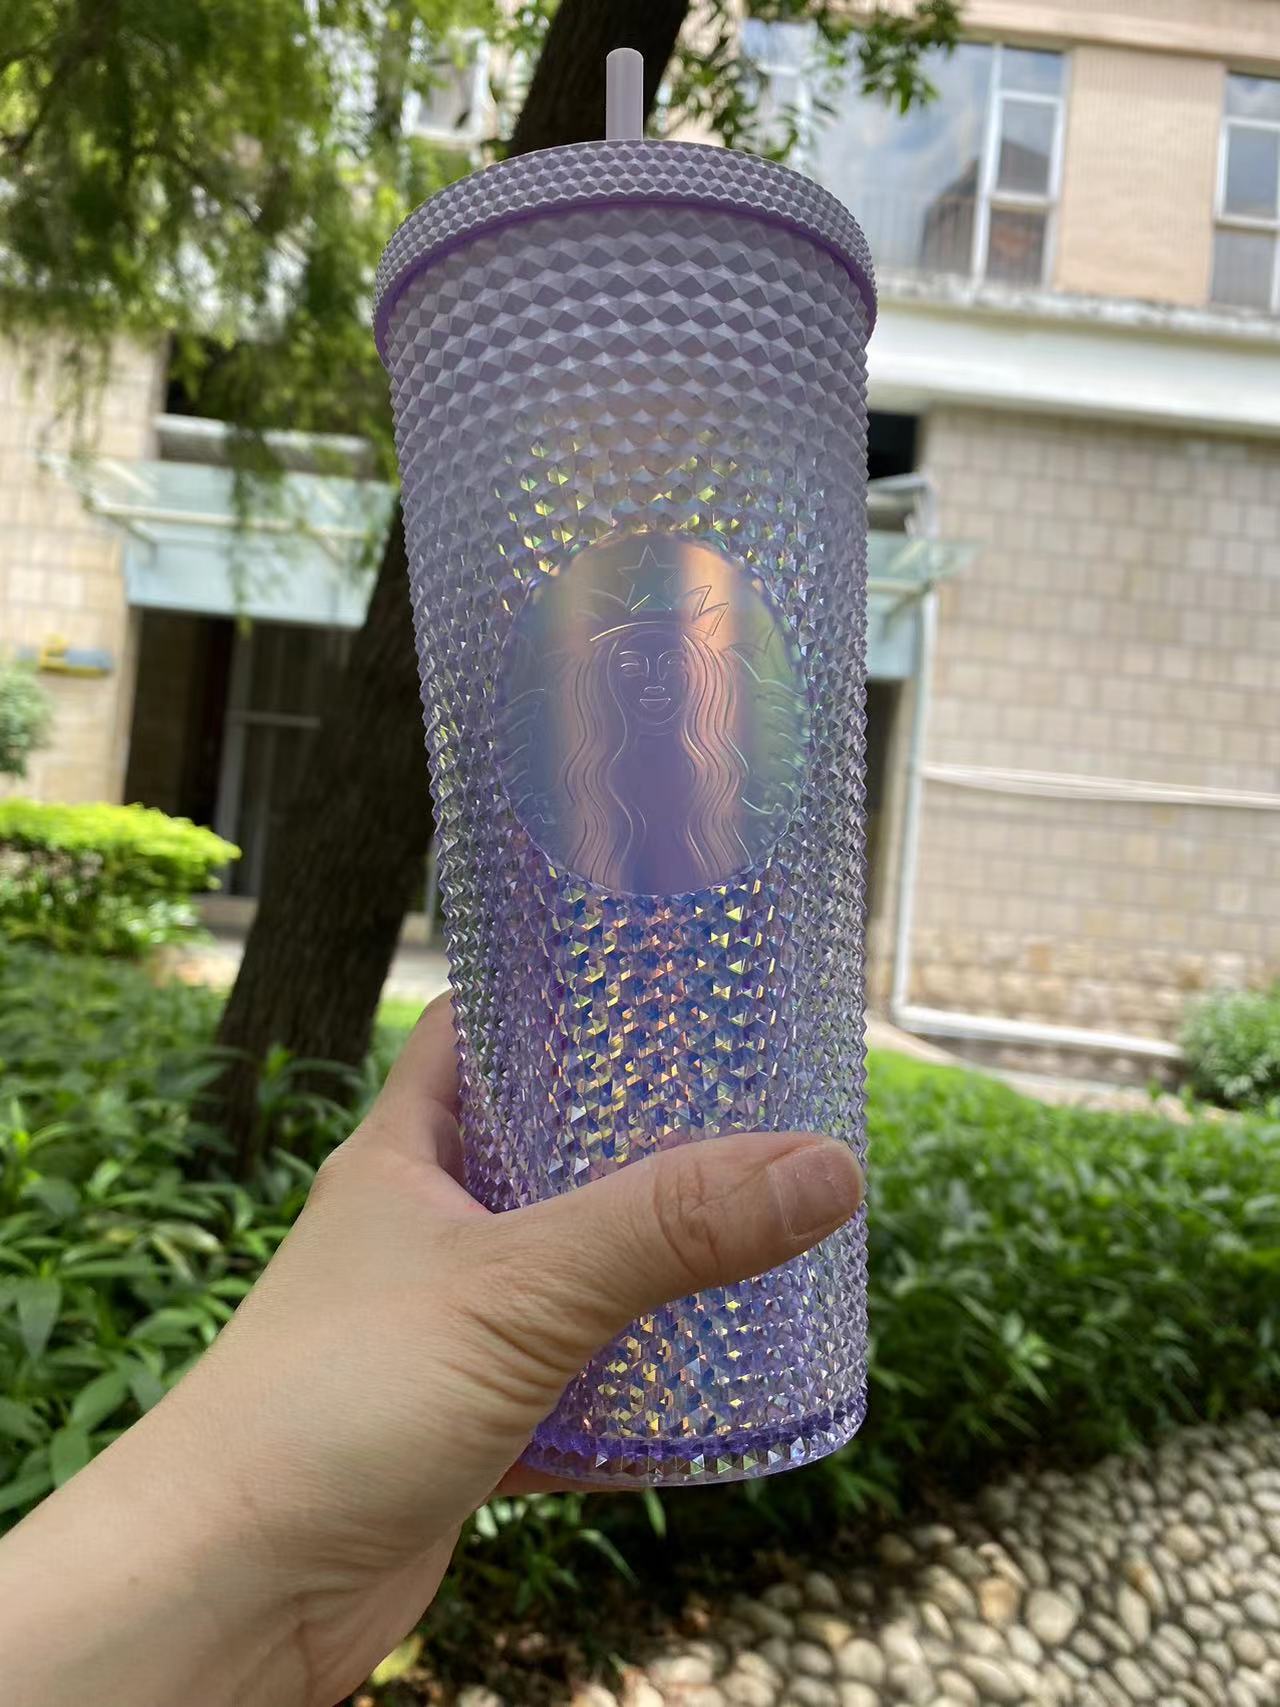 Starbucks taiwan Iridescent purple straw studded cup 24oz